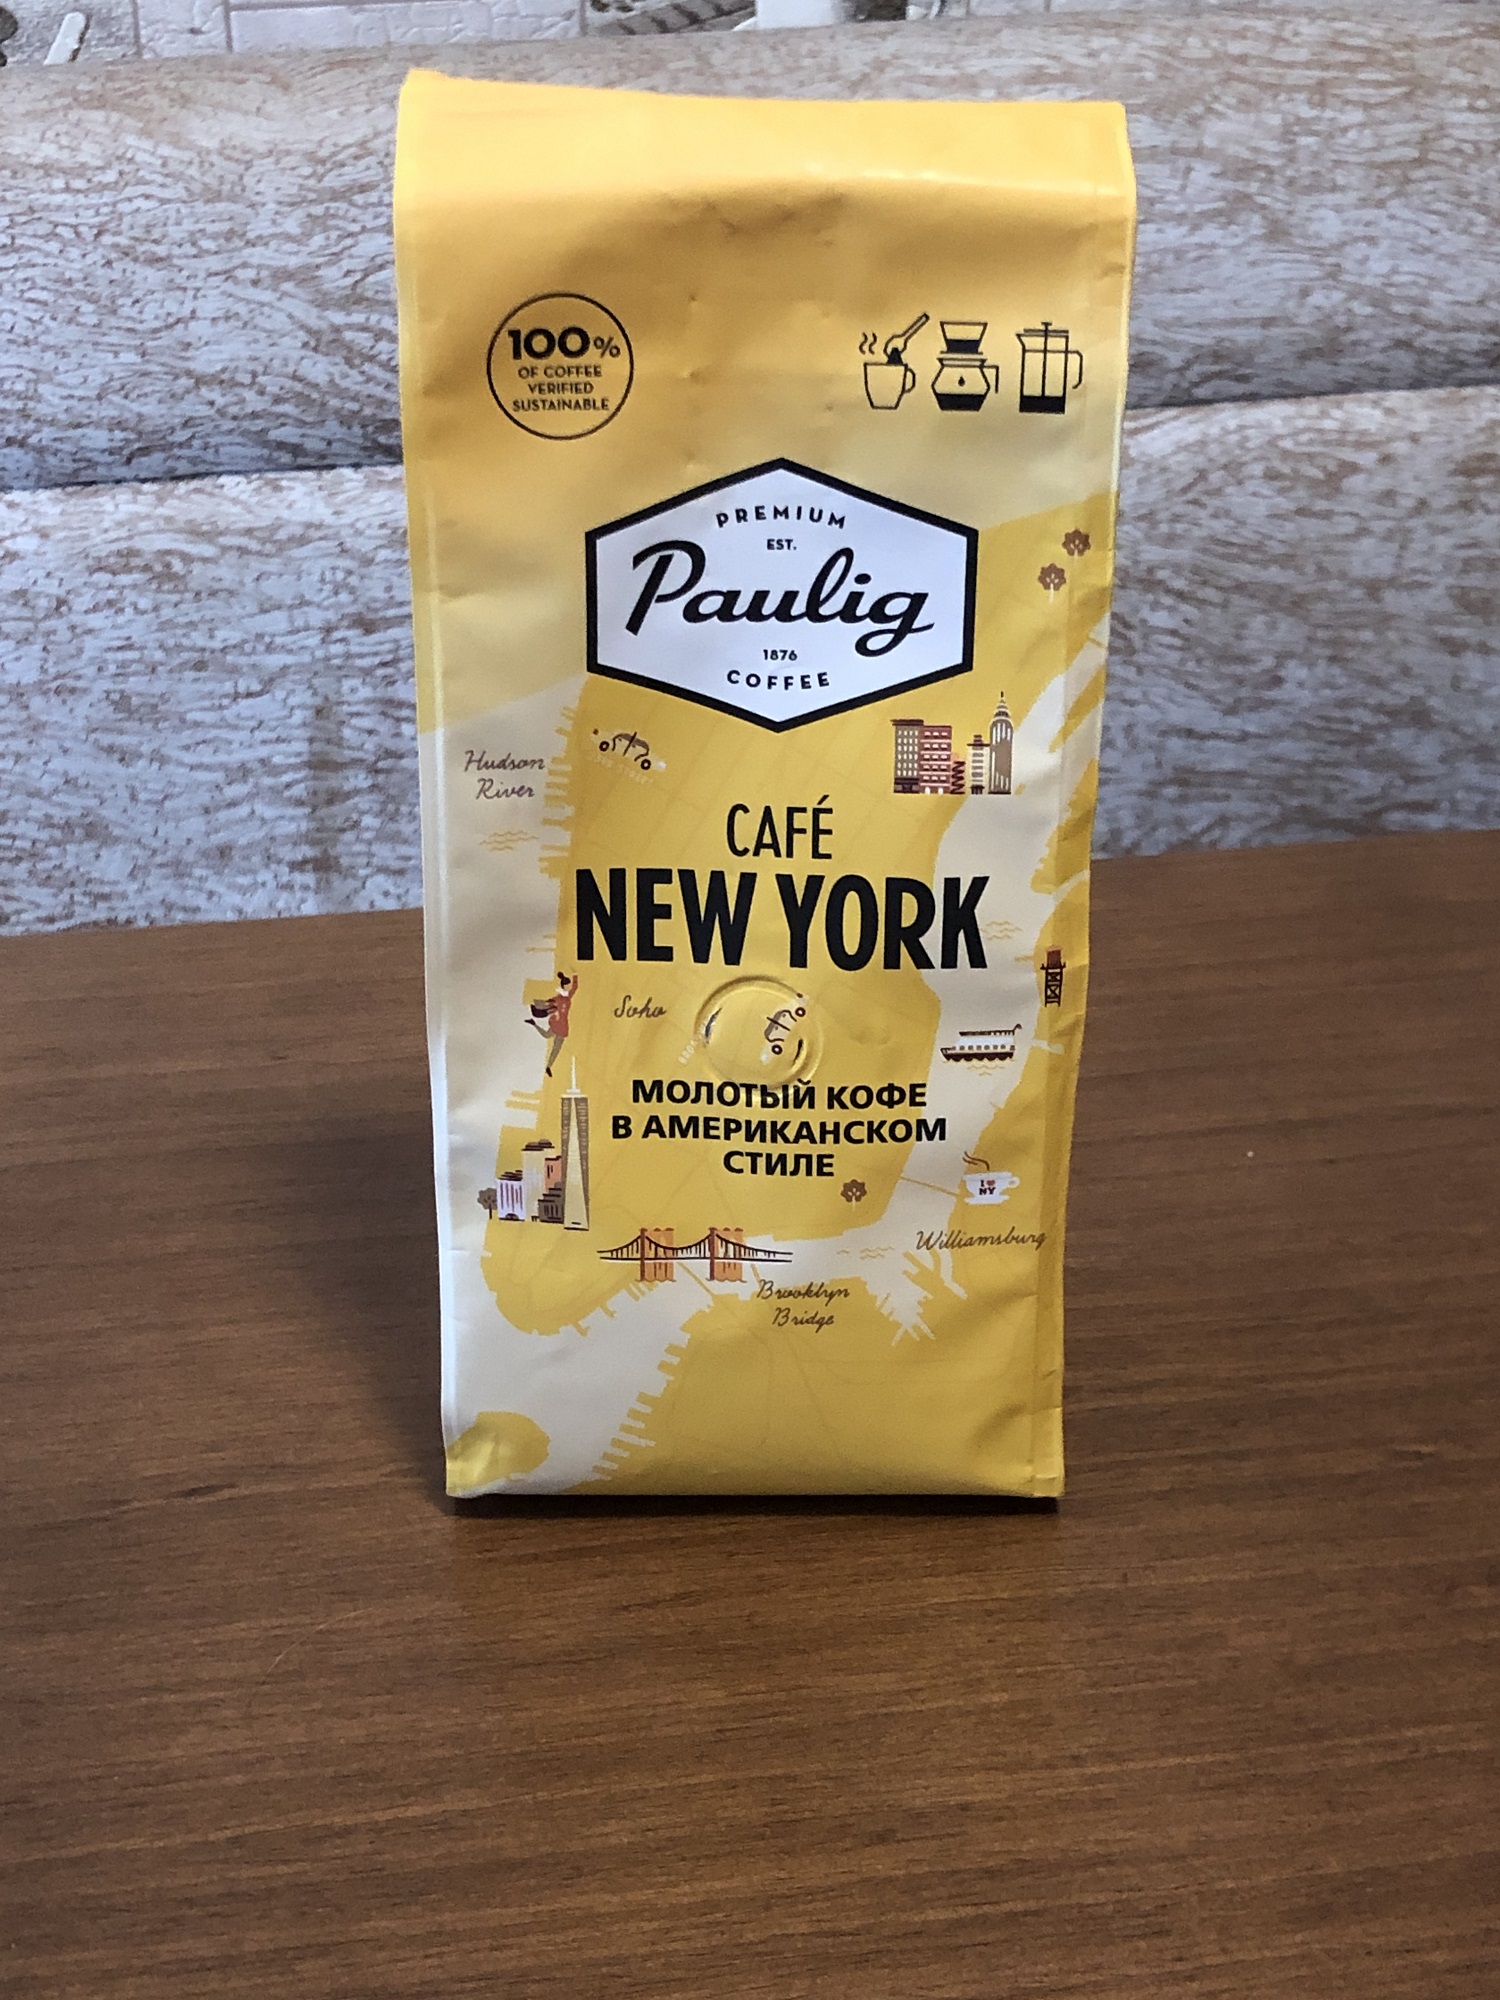 PAULIG CAFE NEW YORK